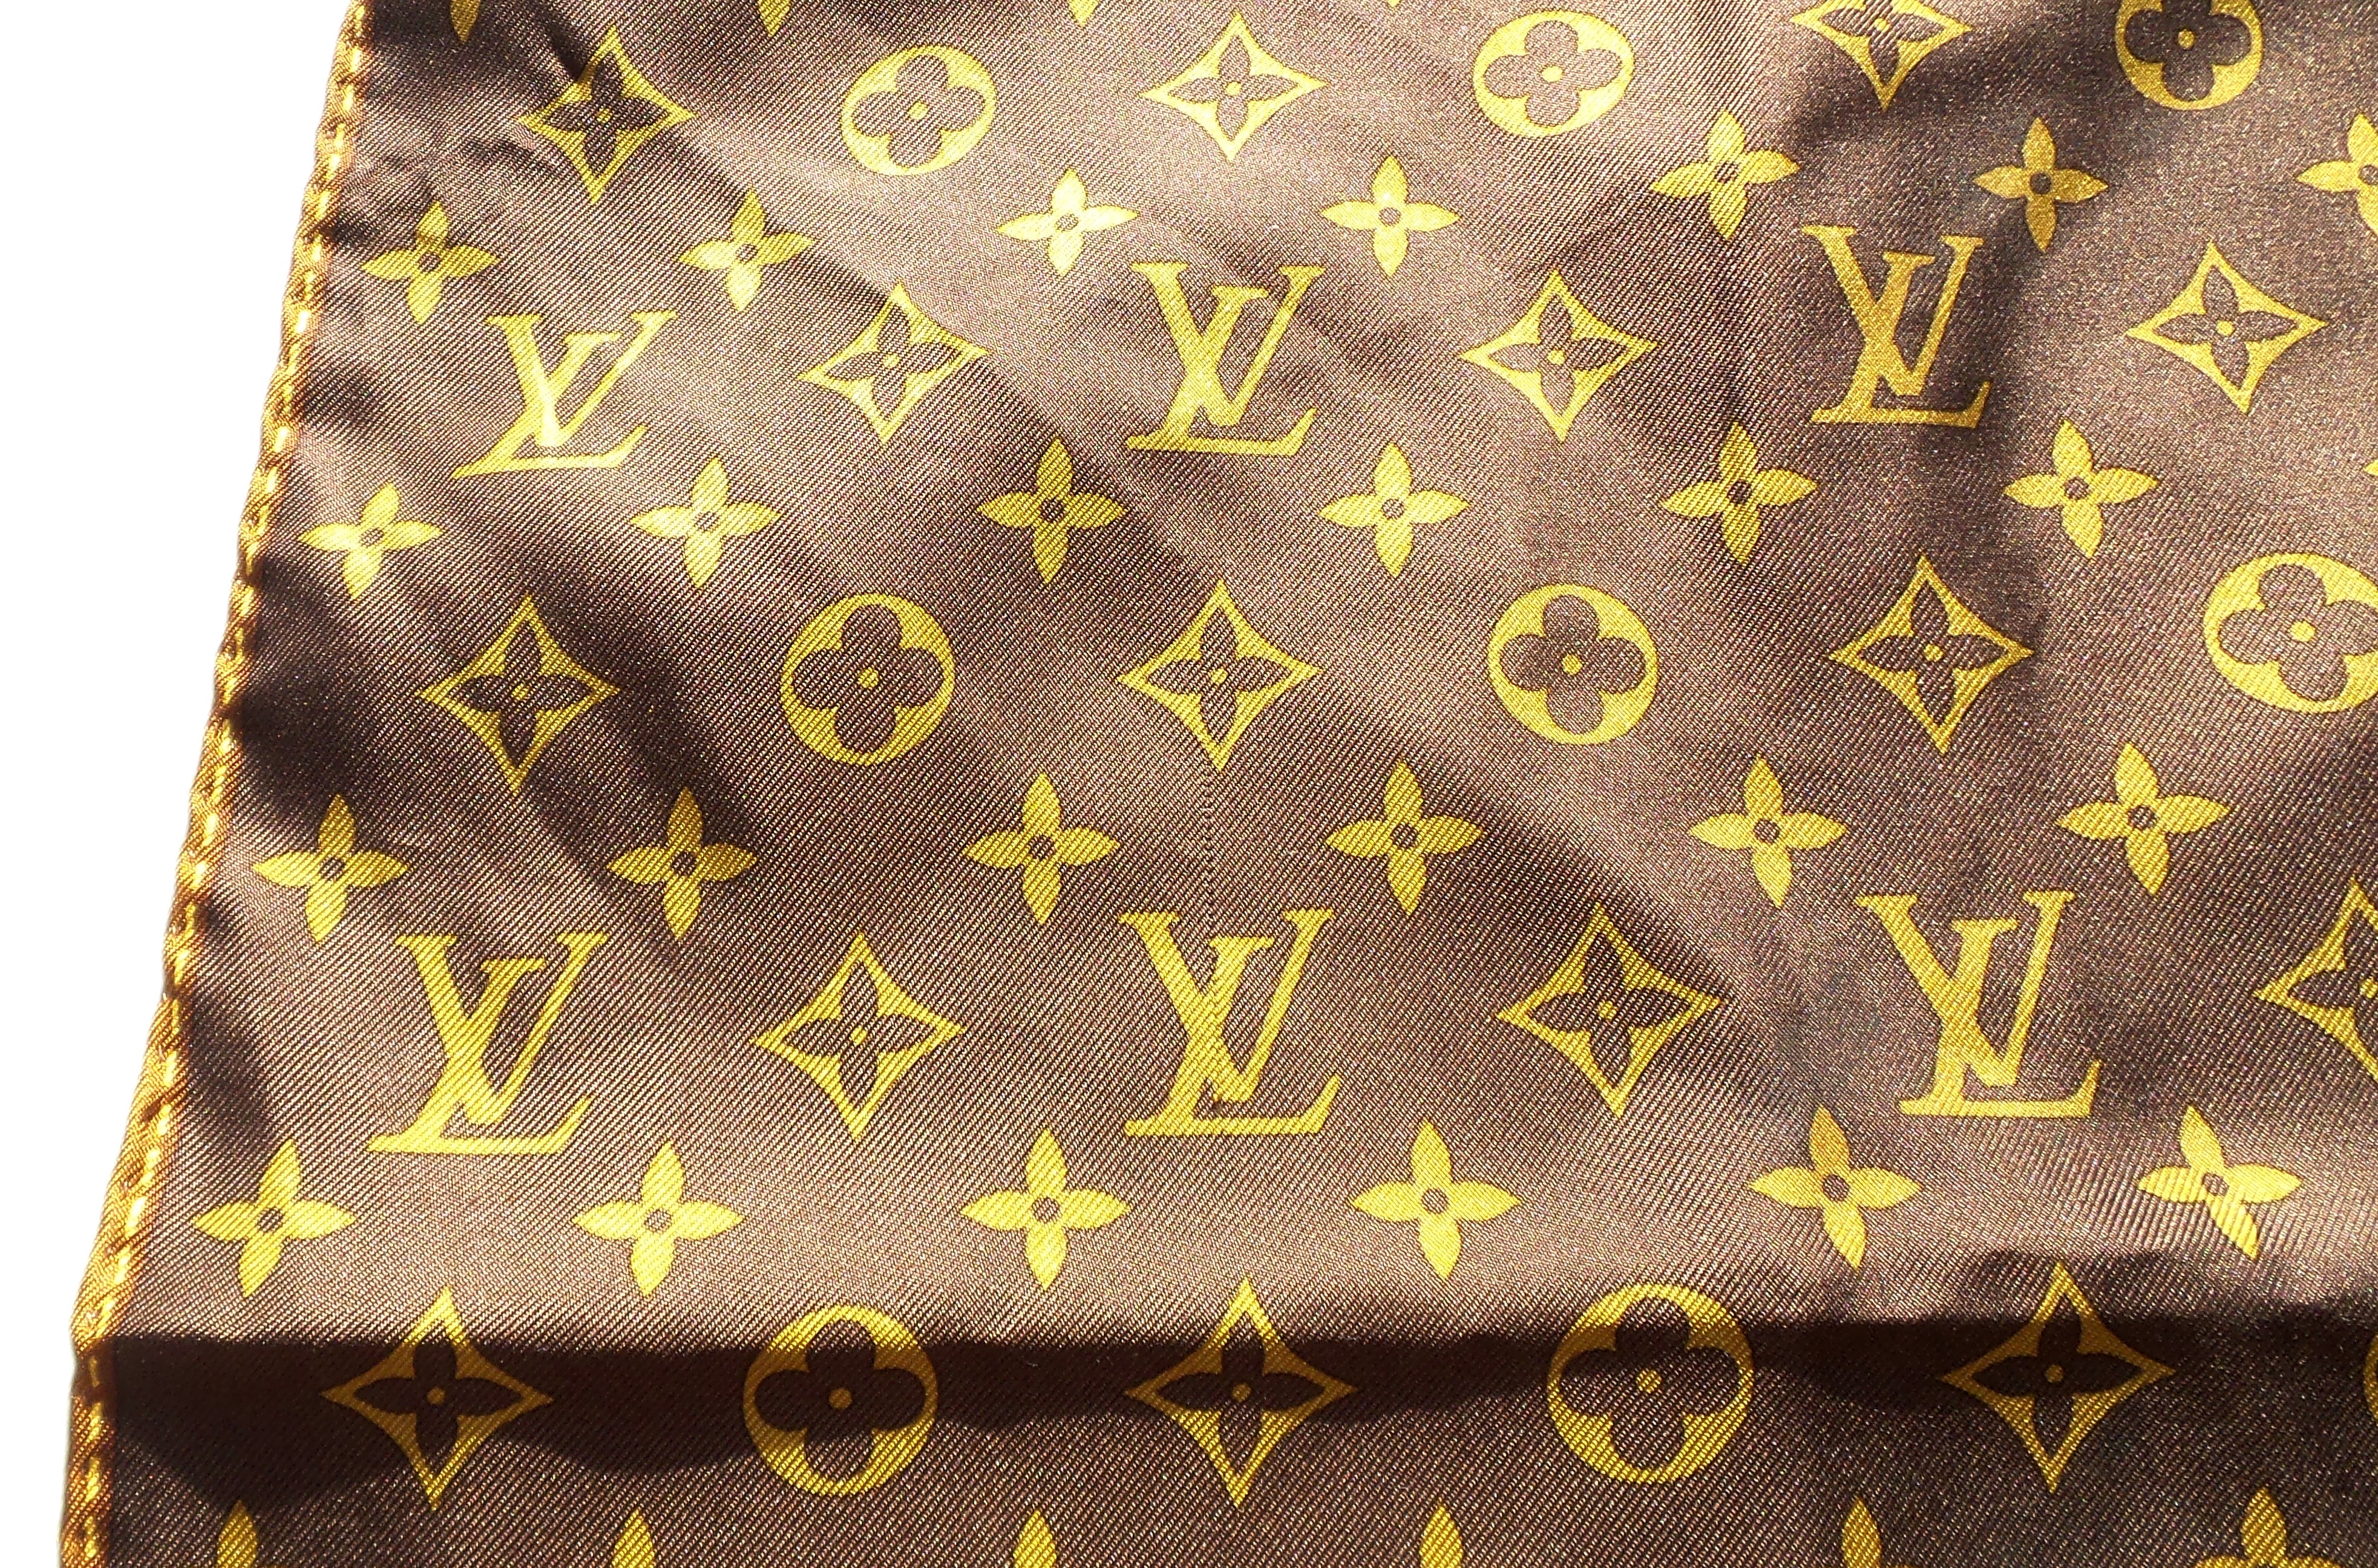 Louis Vuitton Classic Monogram Mink Stole. Pristine Condition. 4